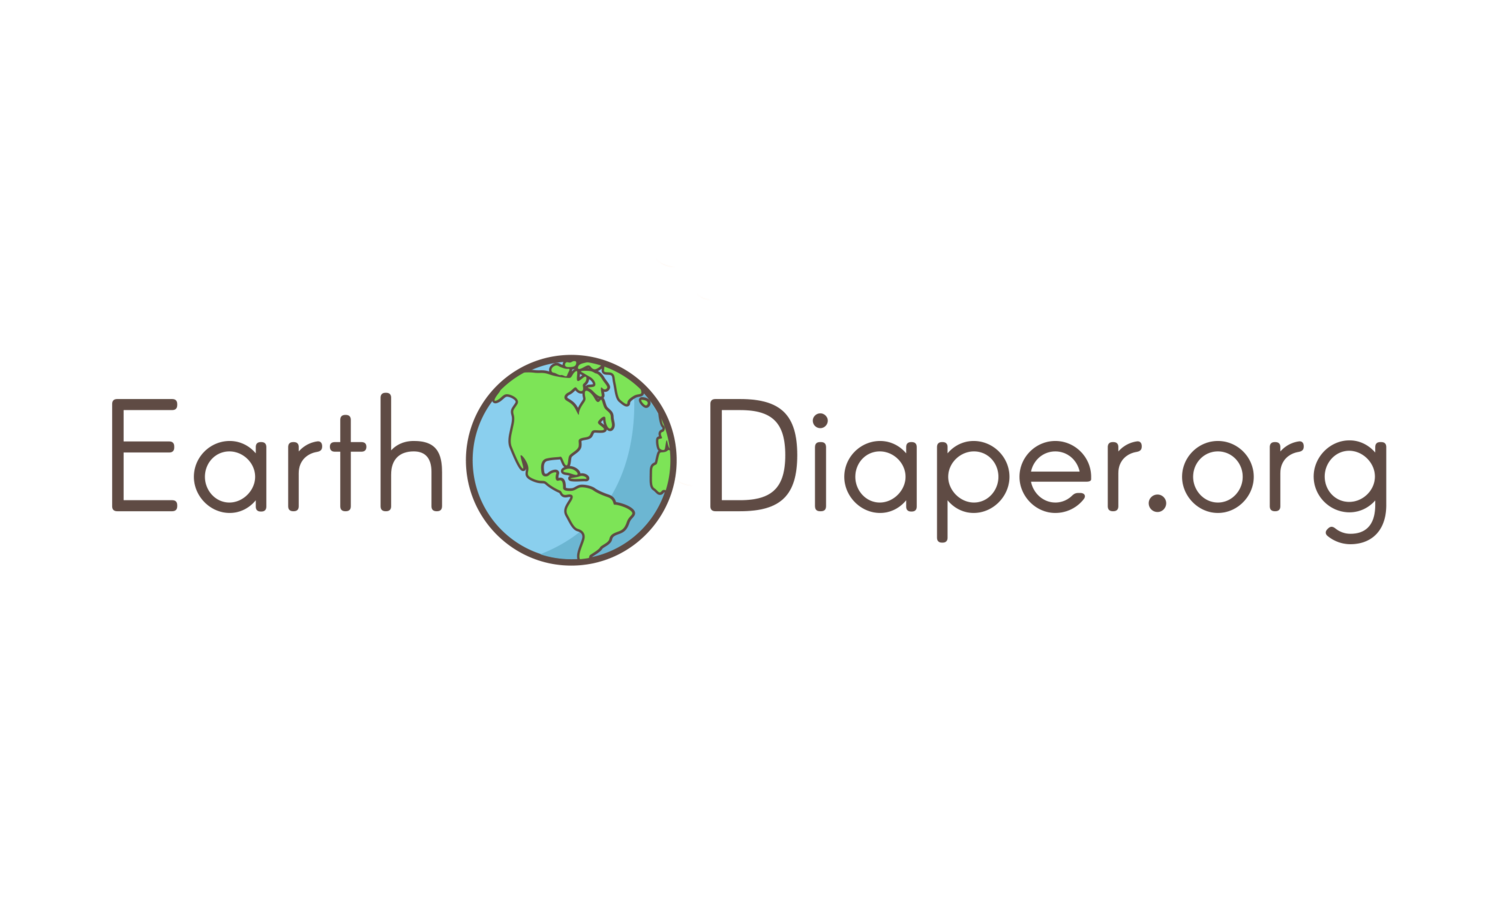   Earth Diaper